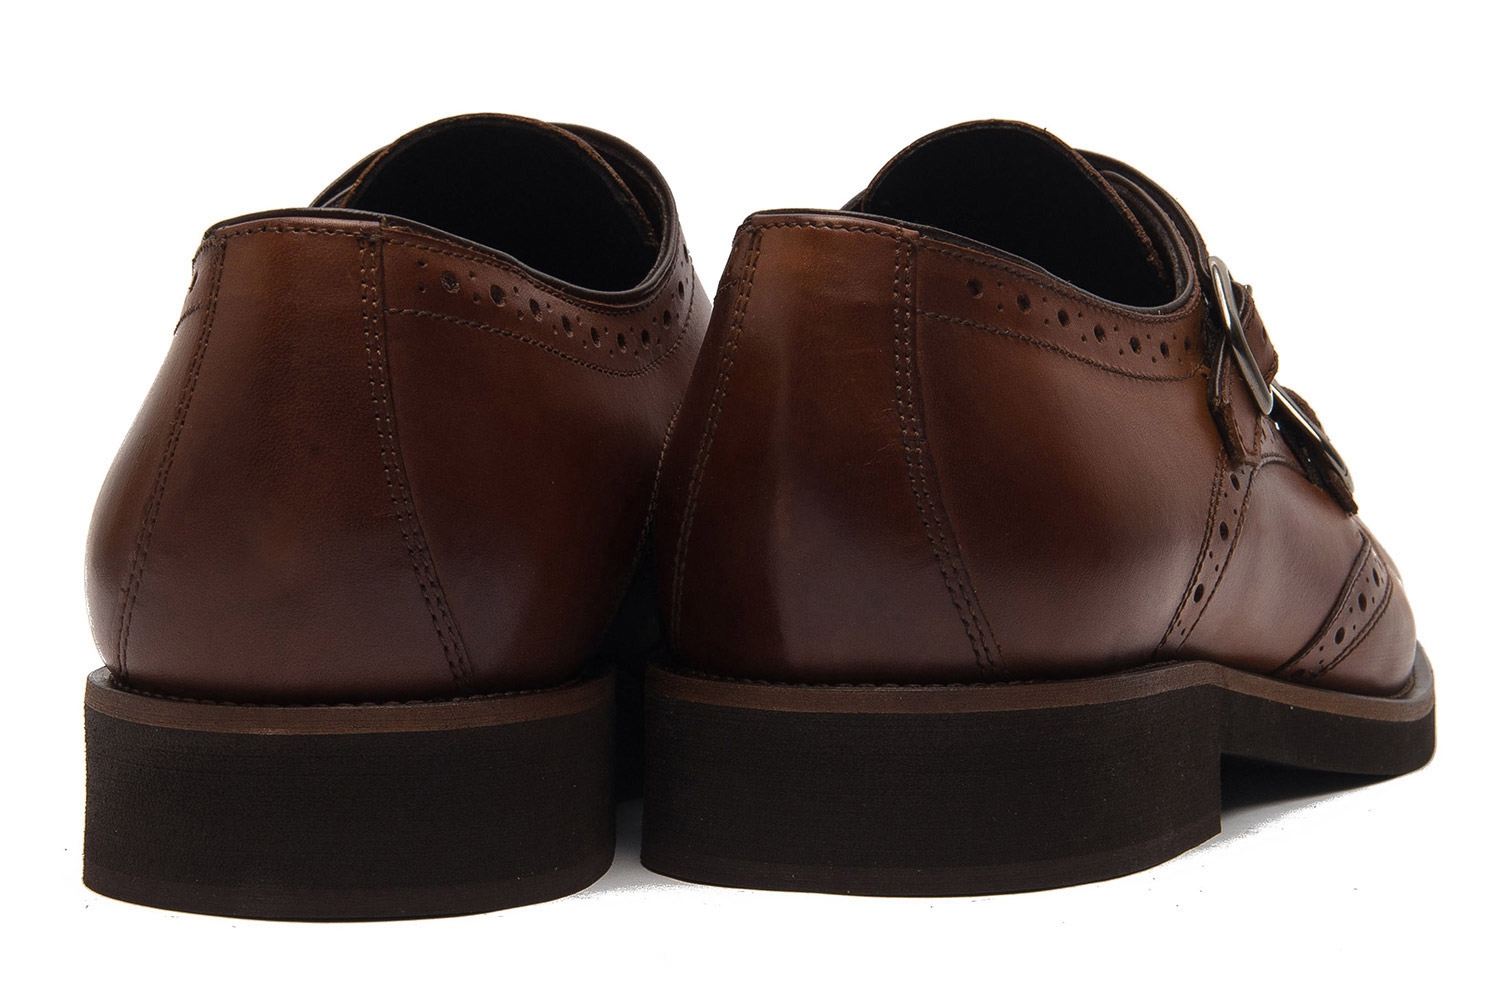 Pantofi monk Bigotti maro piele naturala 2